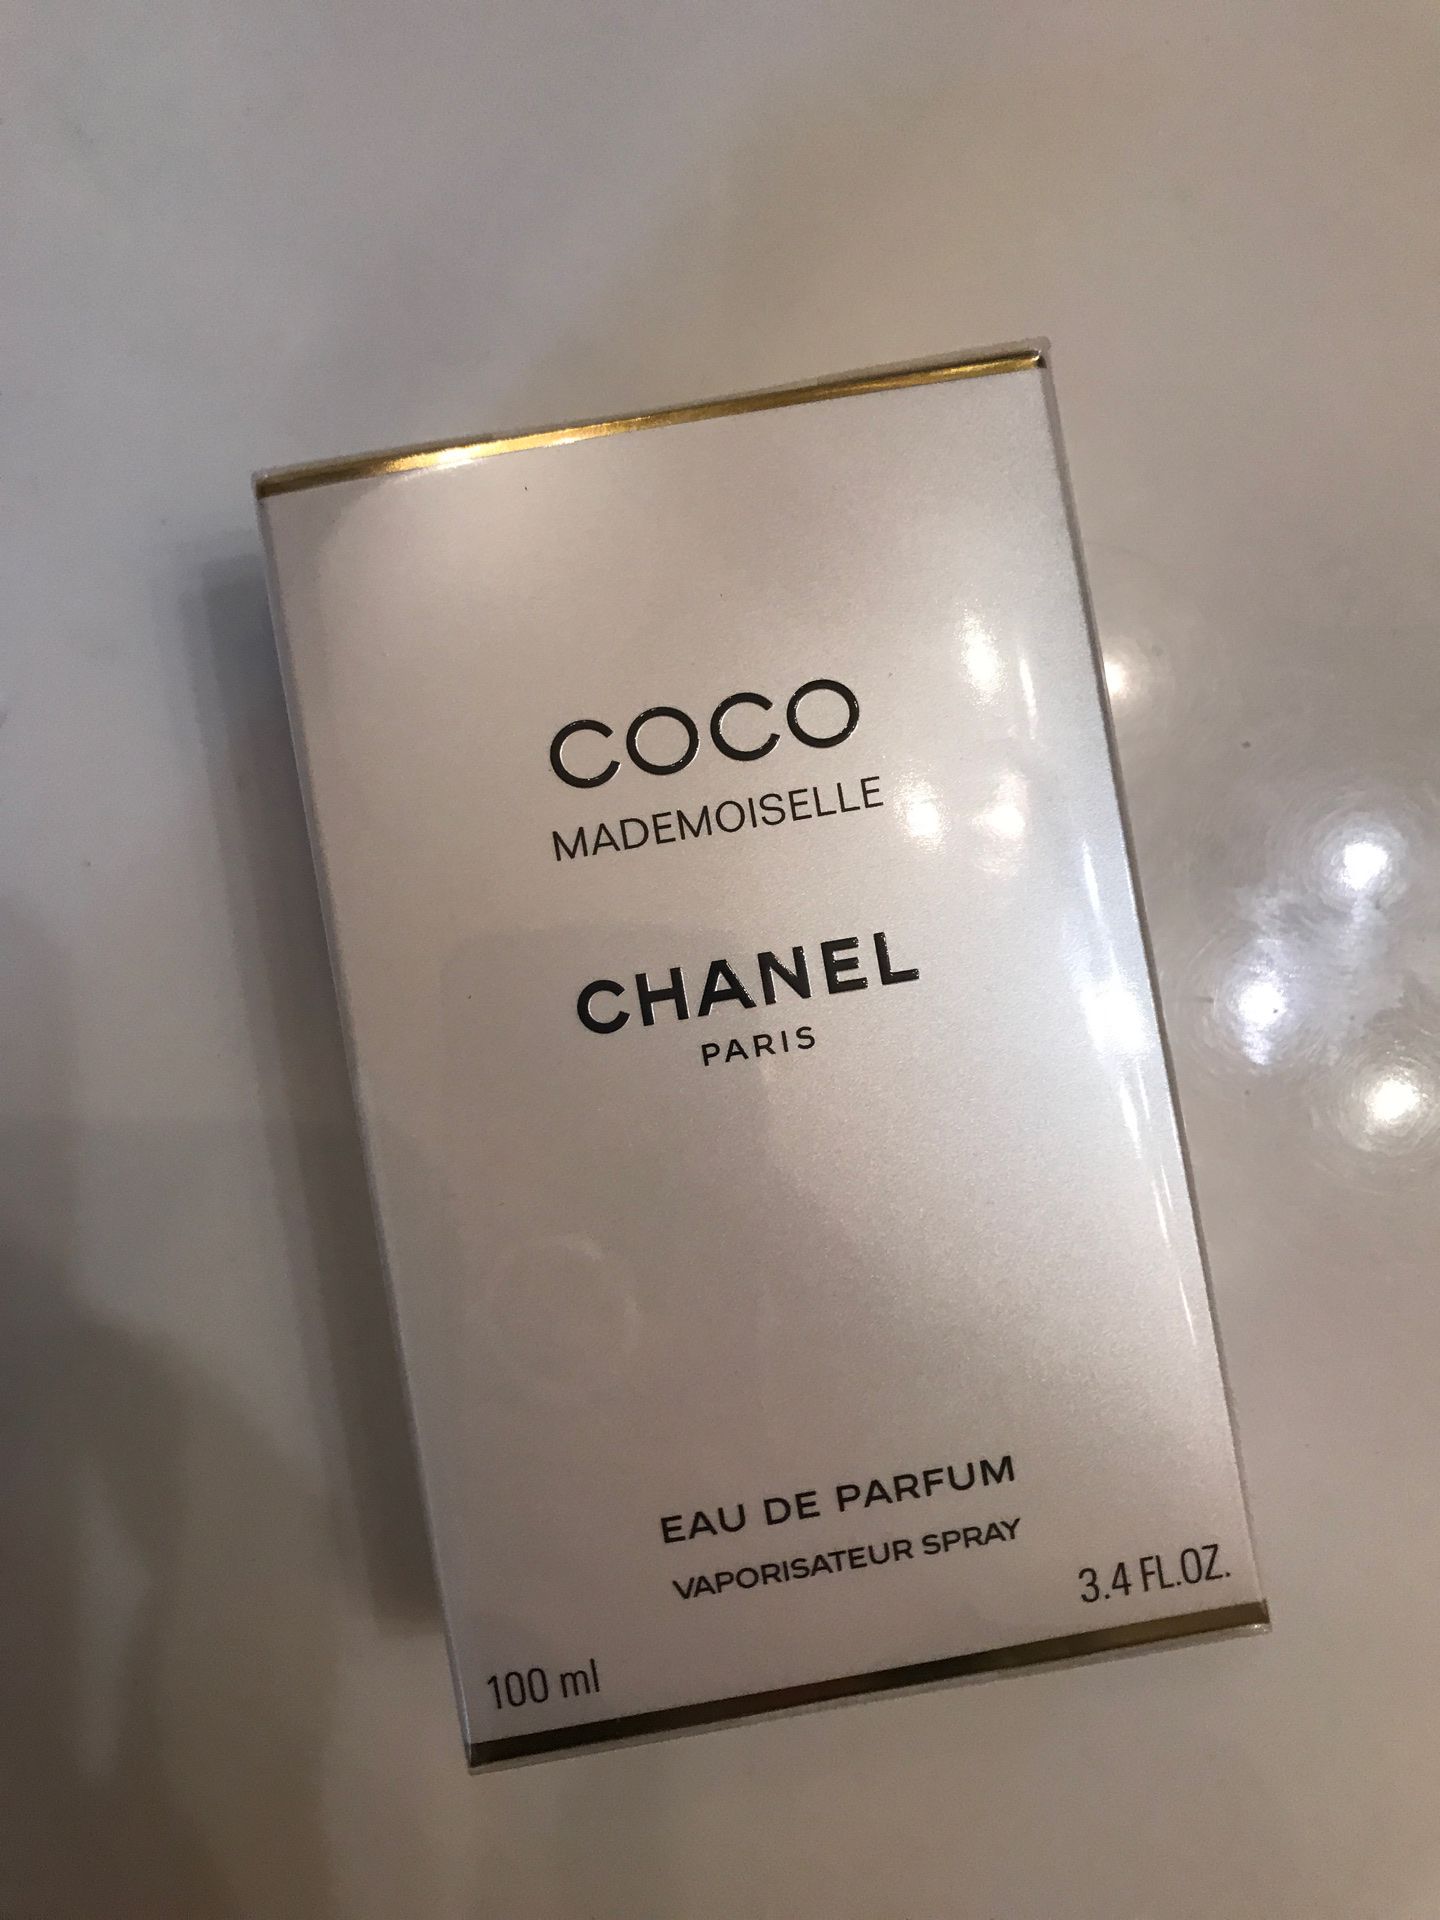 Authentic Coco mademoiselle CHANEL perfume